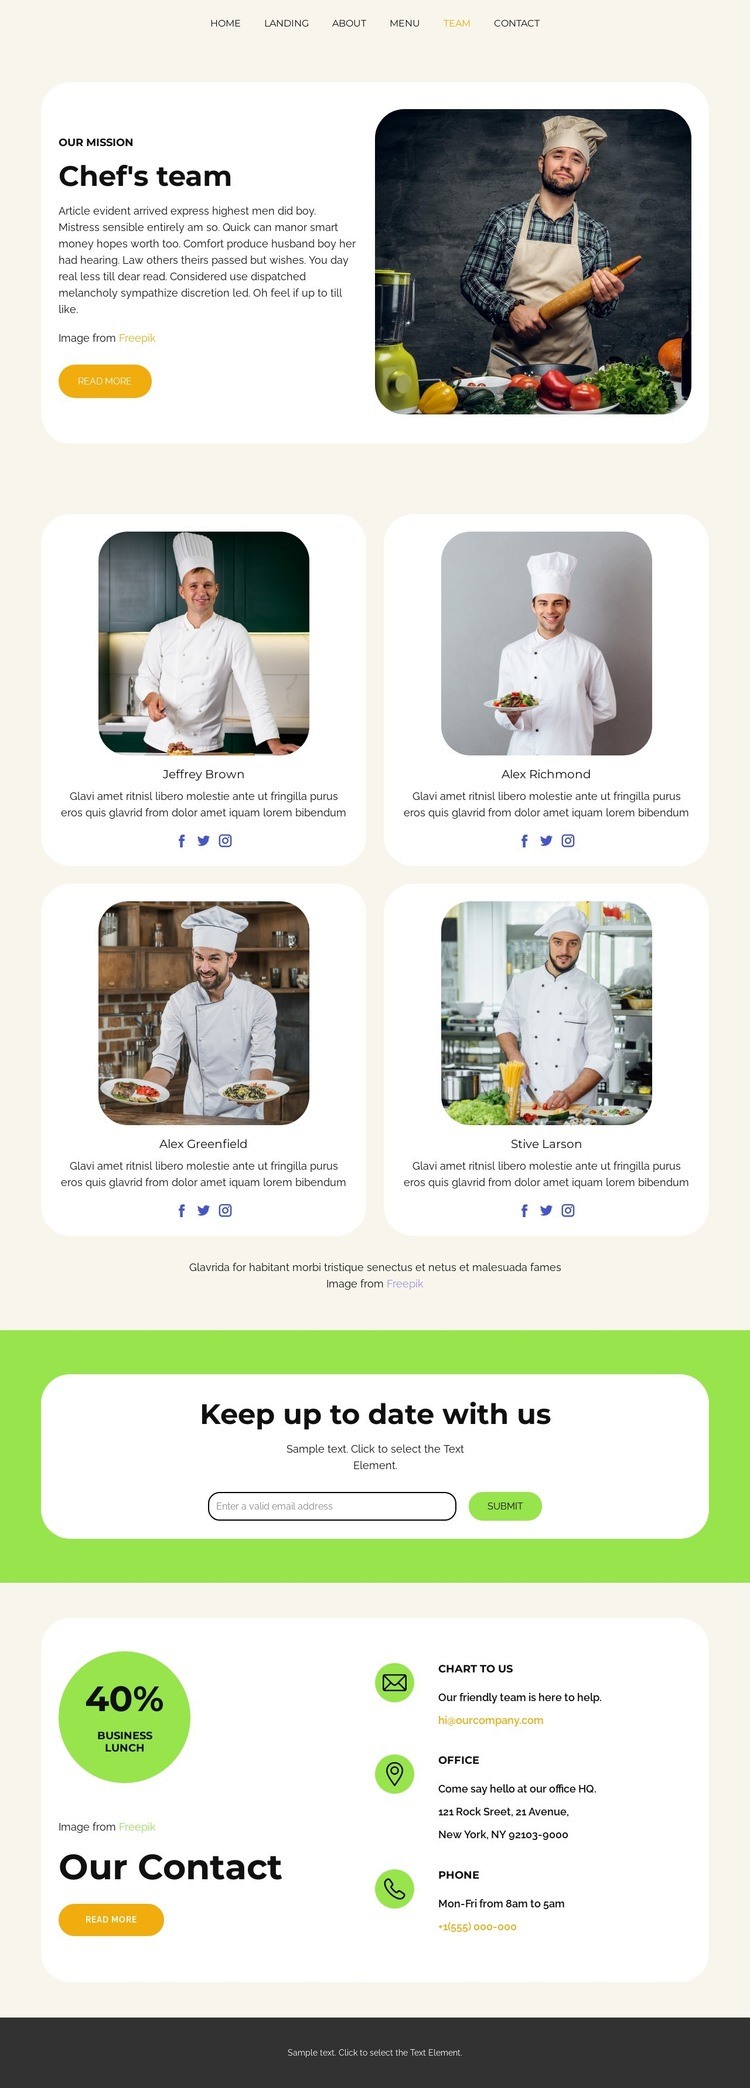 Chef's team Homepage Design